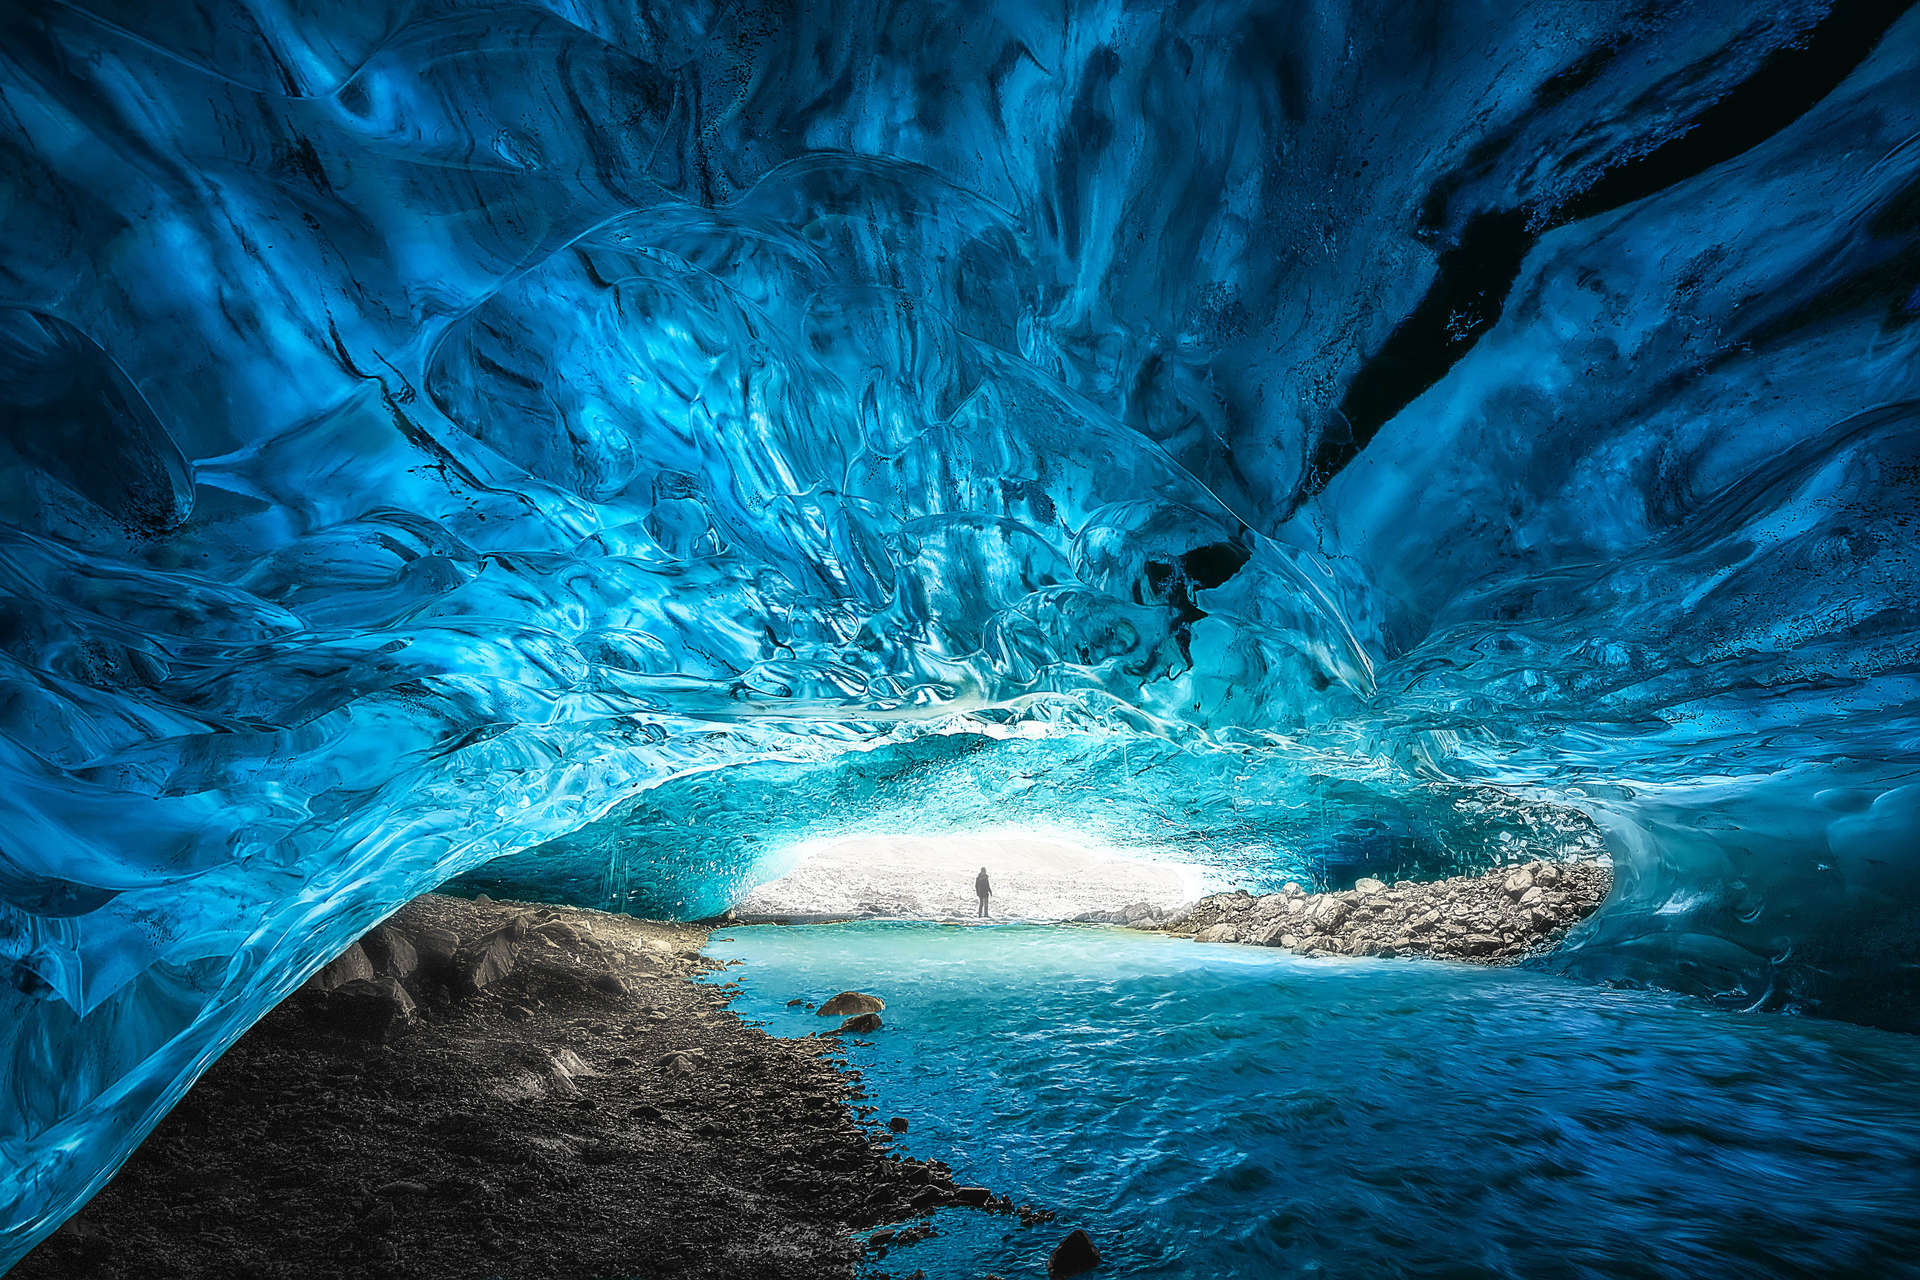 La grotta di ghiaccio blu zaffiro nel Parco Nazionale Vatnajökull, Islanda